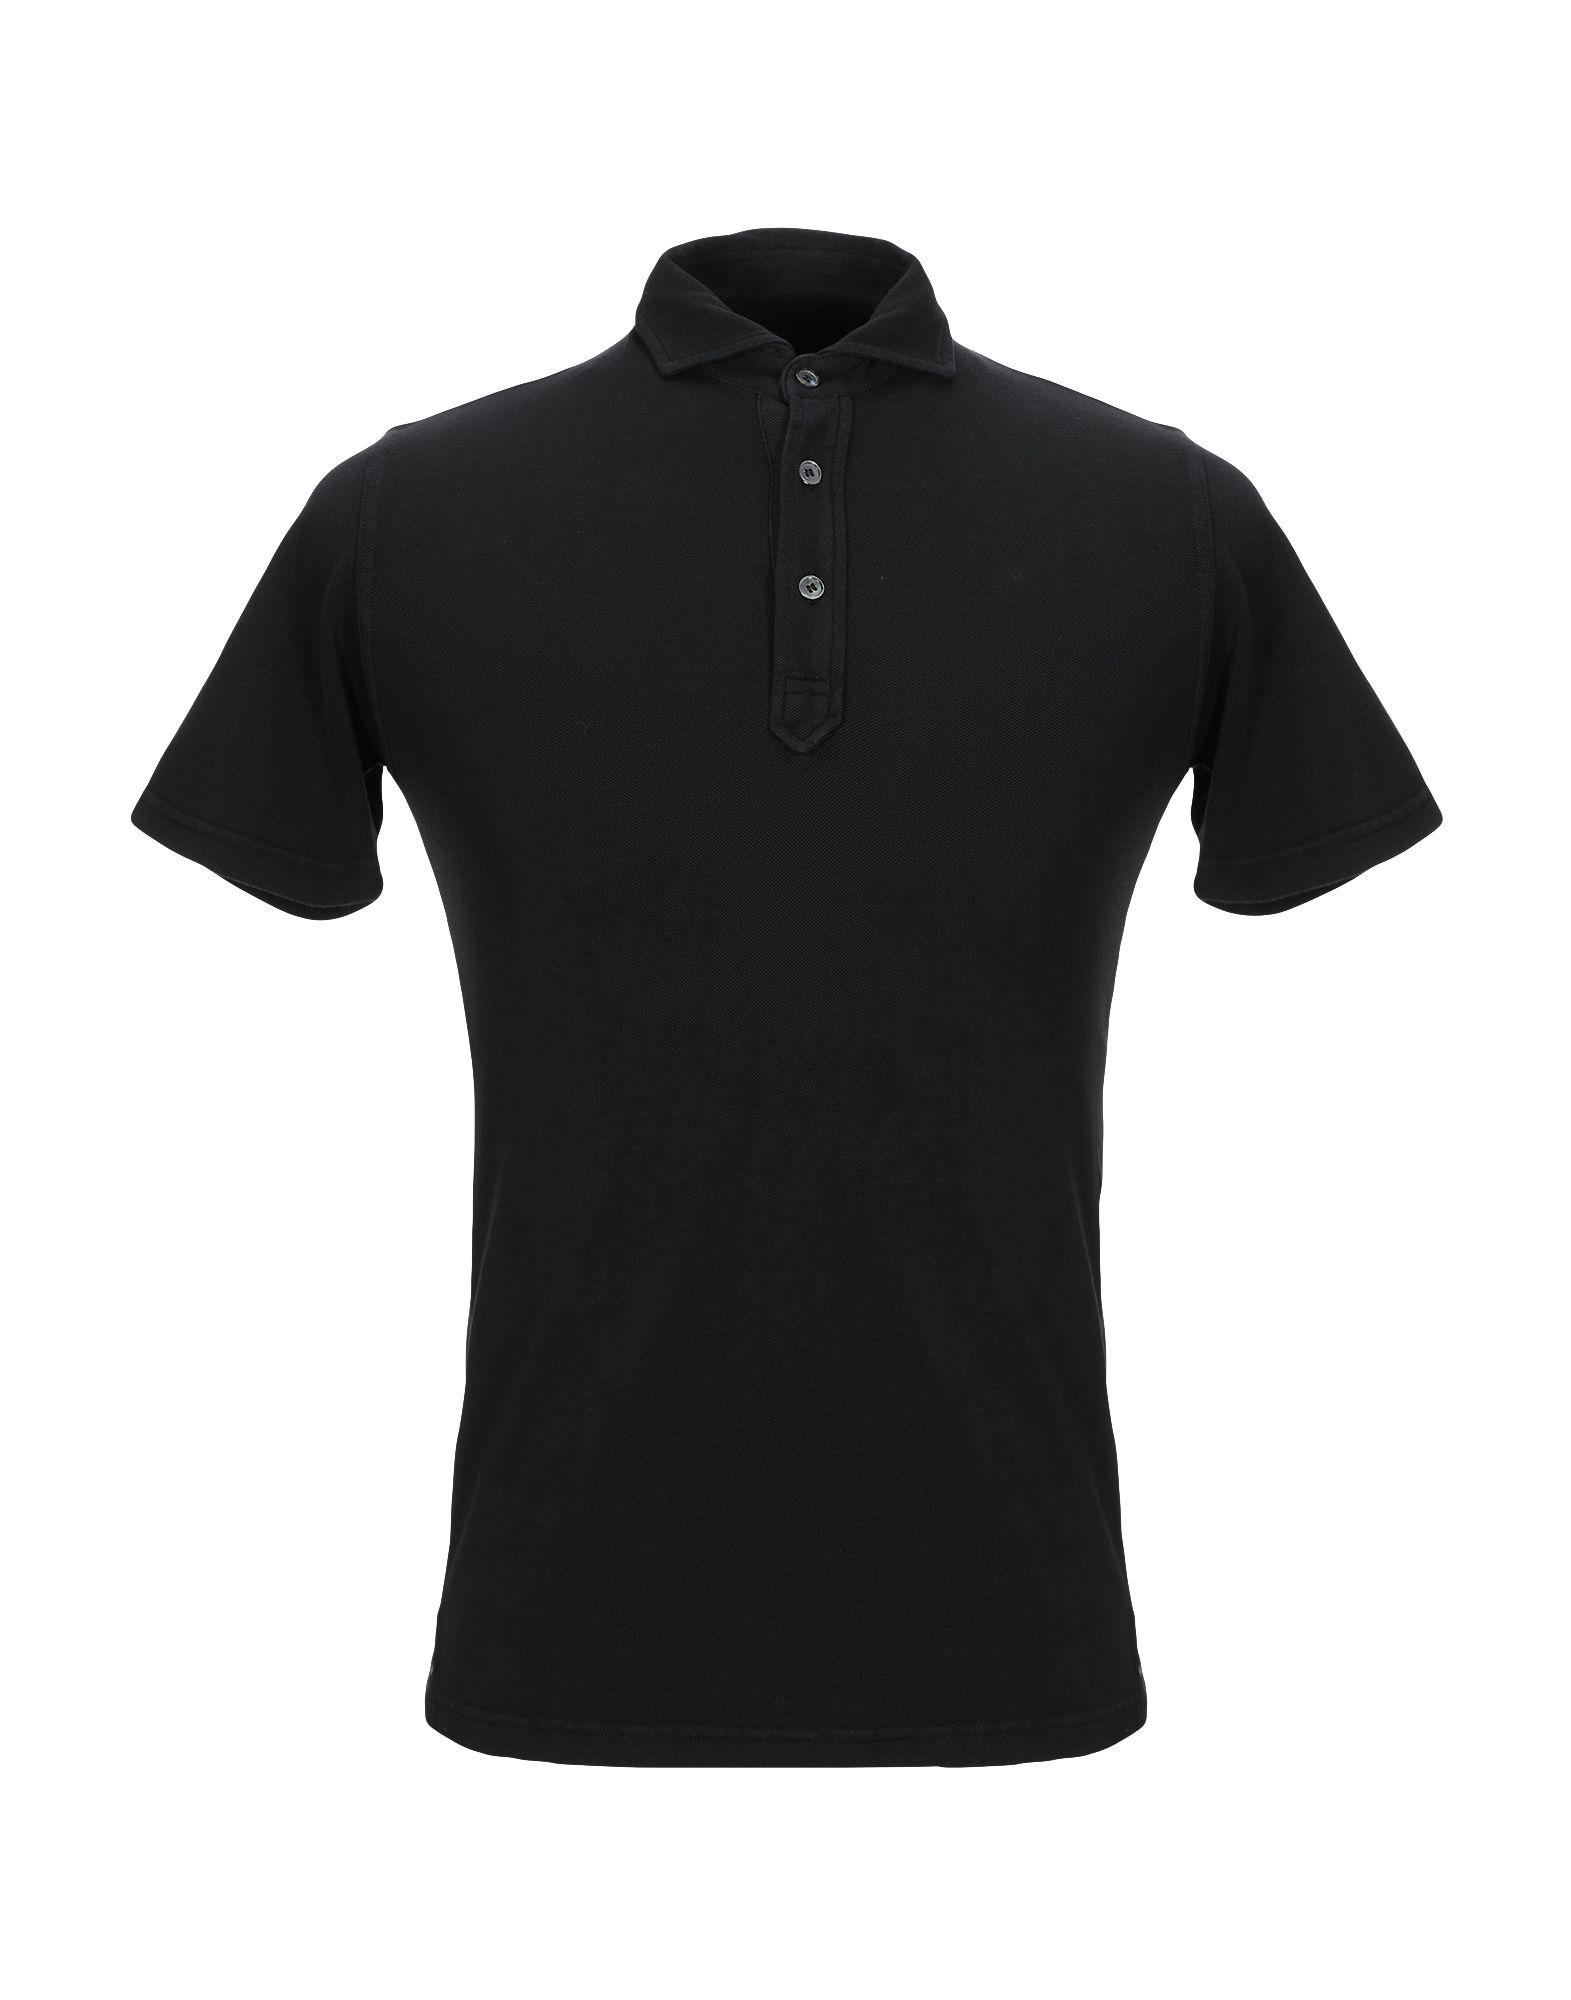 Fedeli Cotton Polo Shirt in Black for Men - Lyst